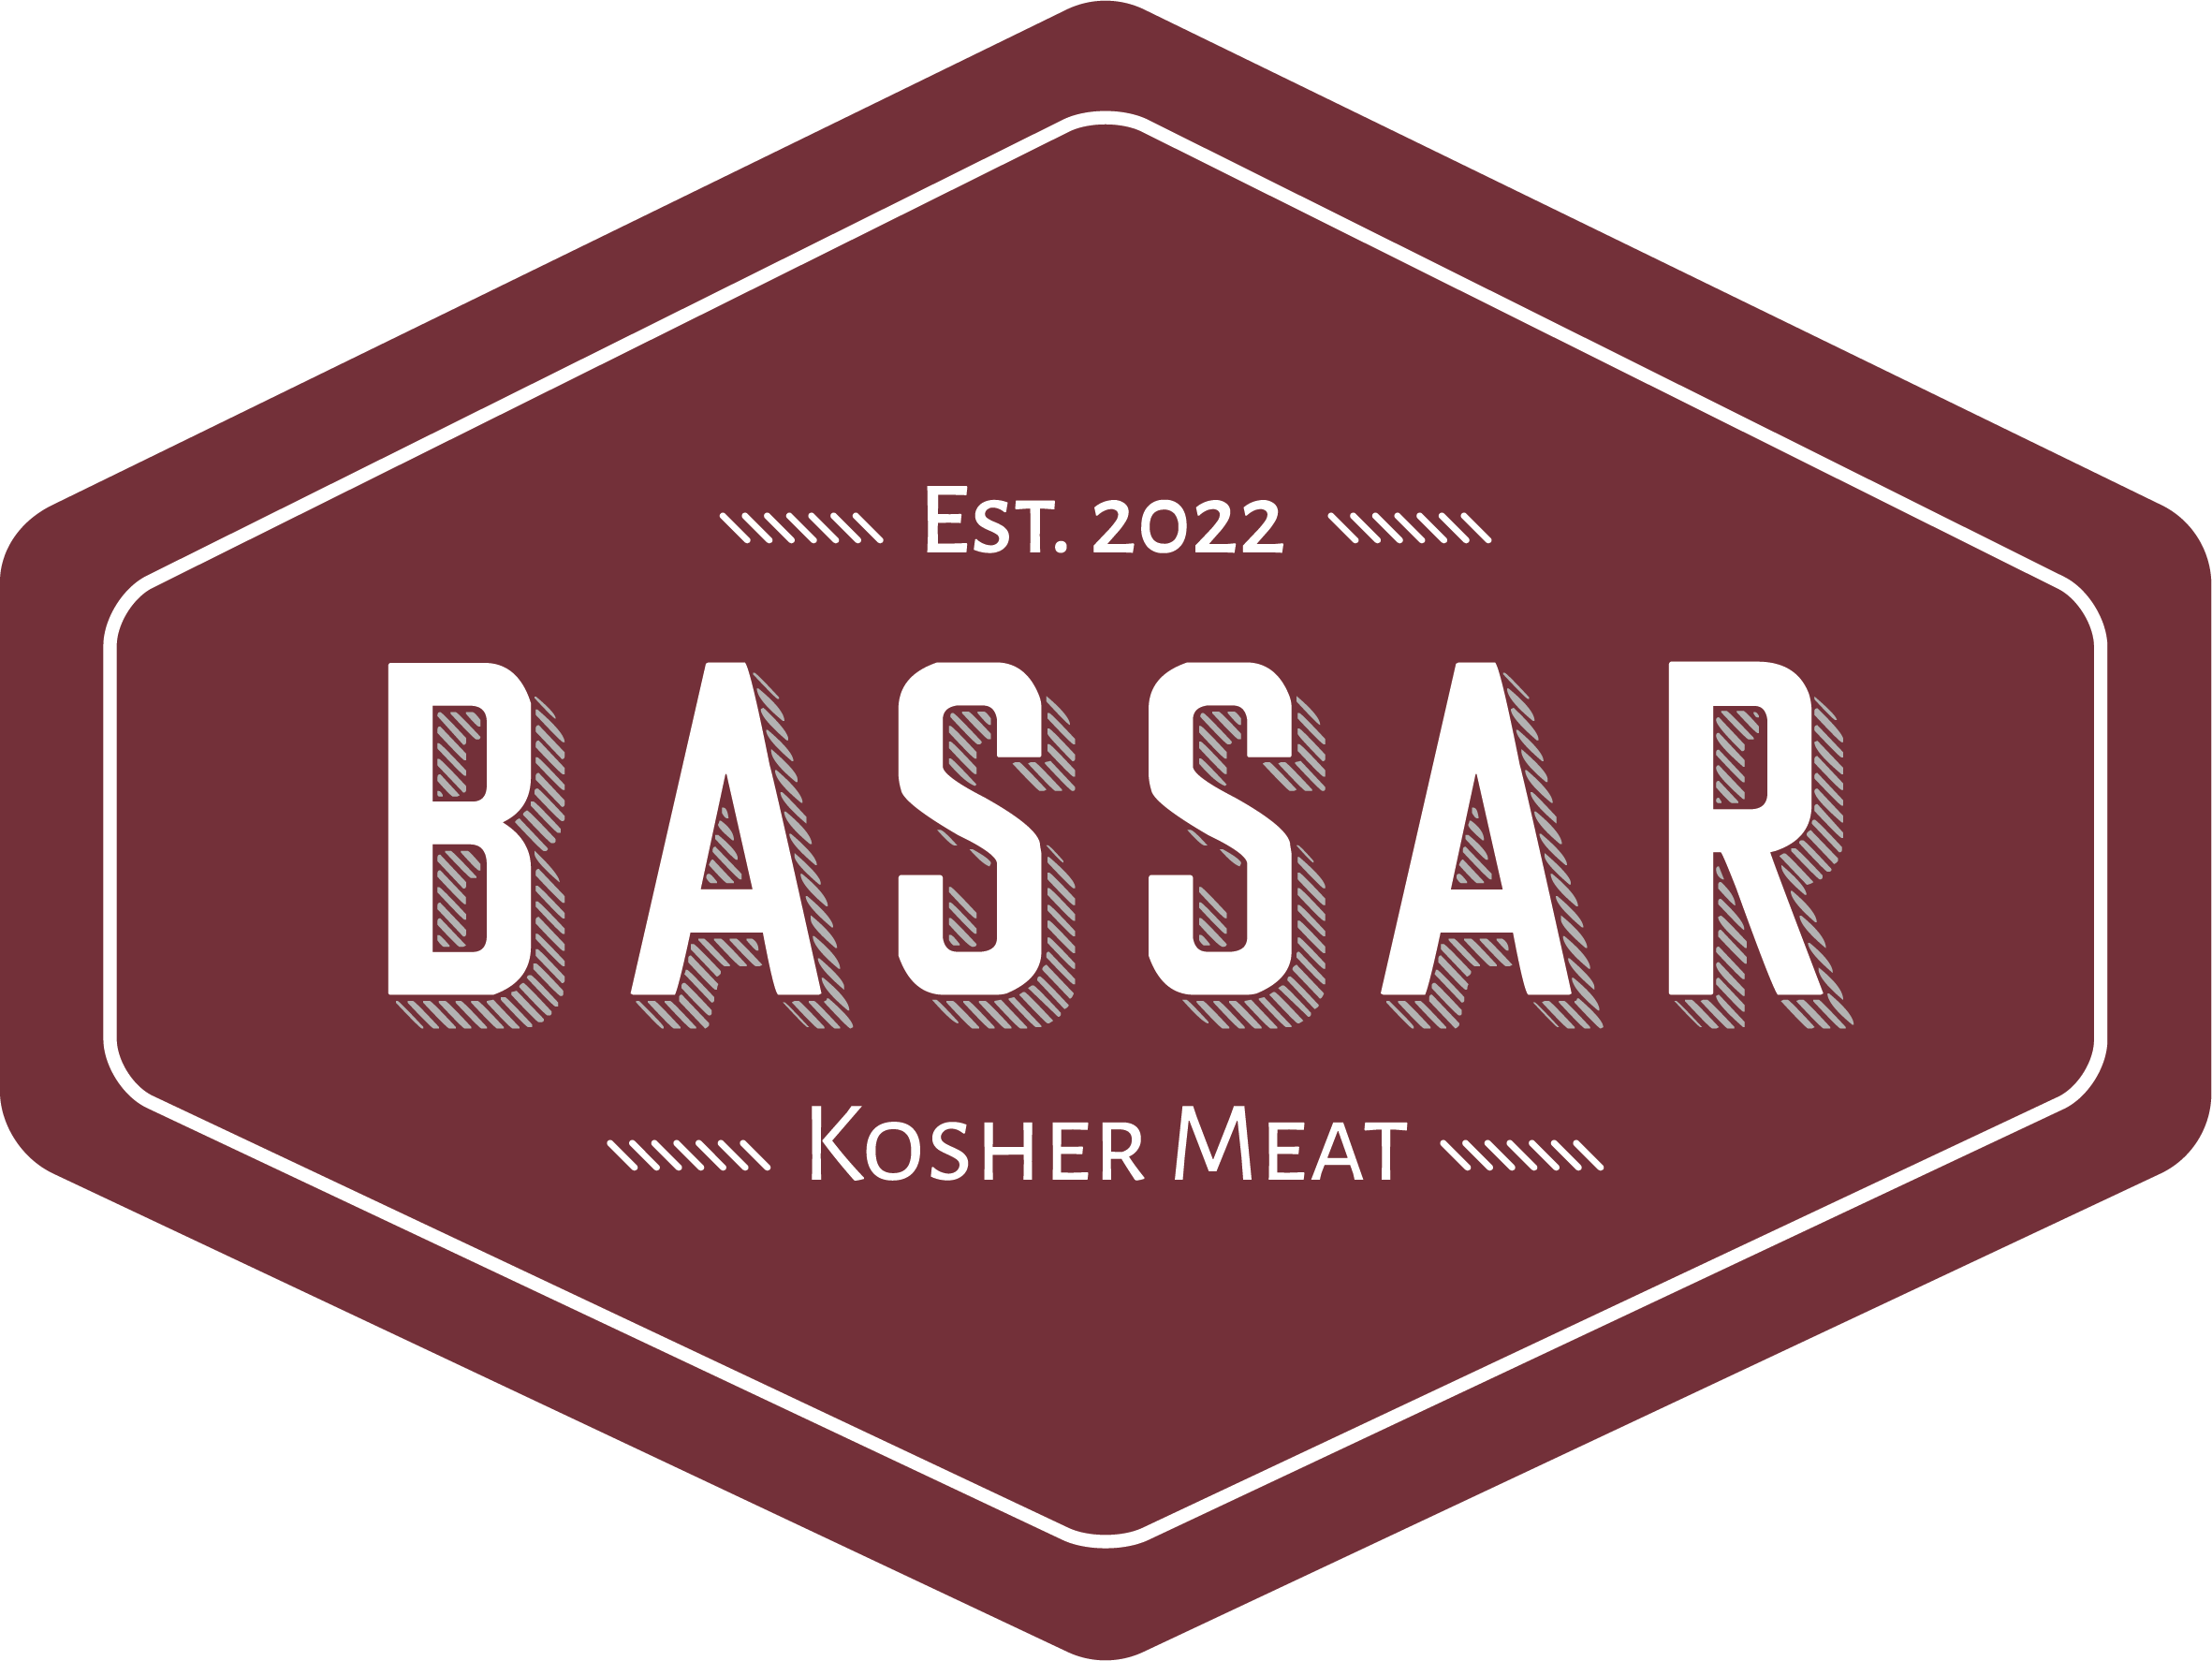 Bassar - Premier Online Kosher Meat Store in UAE